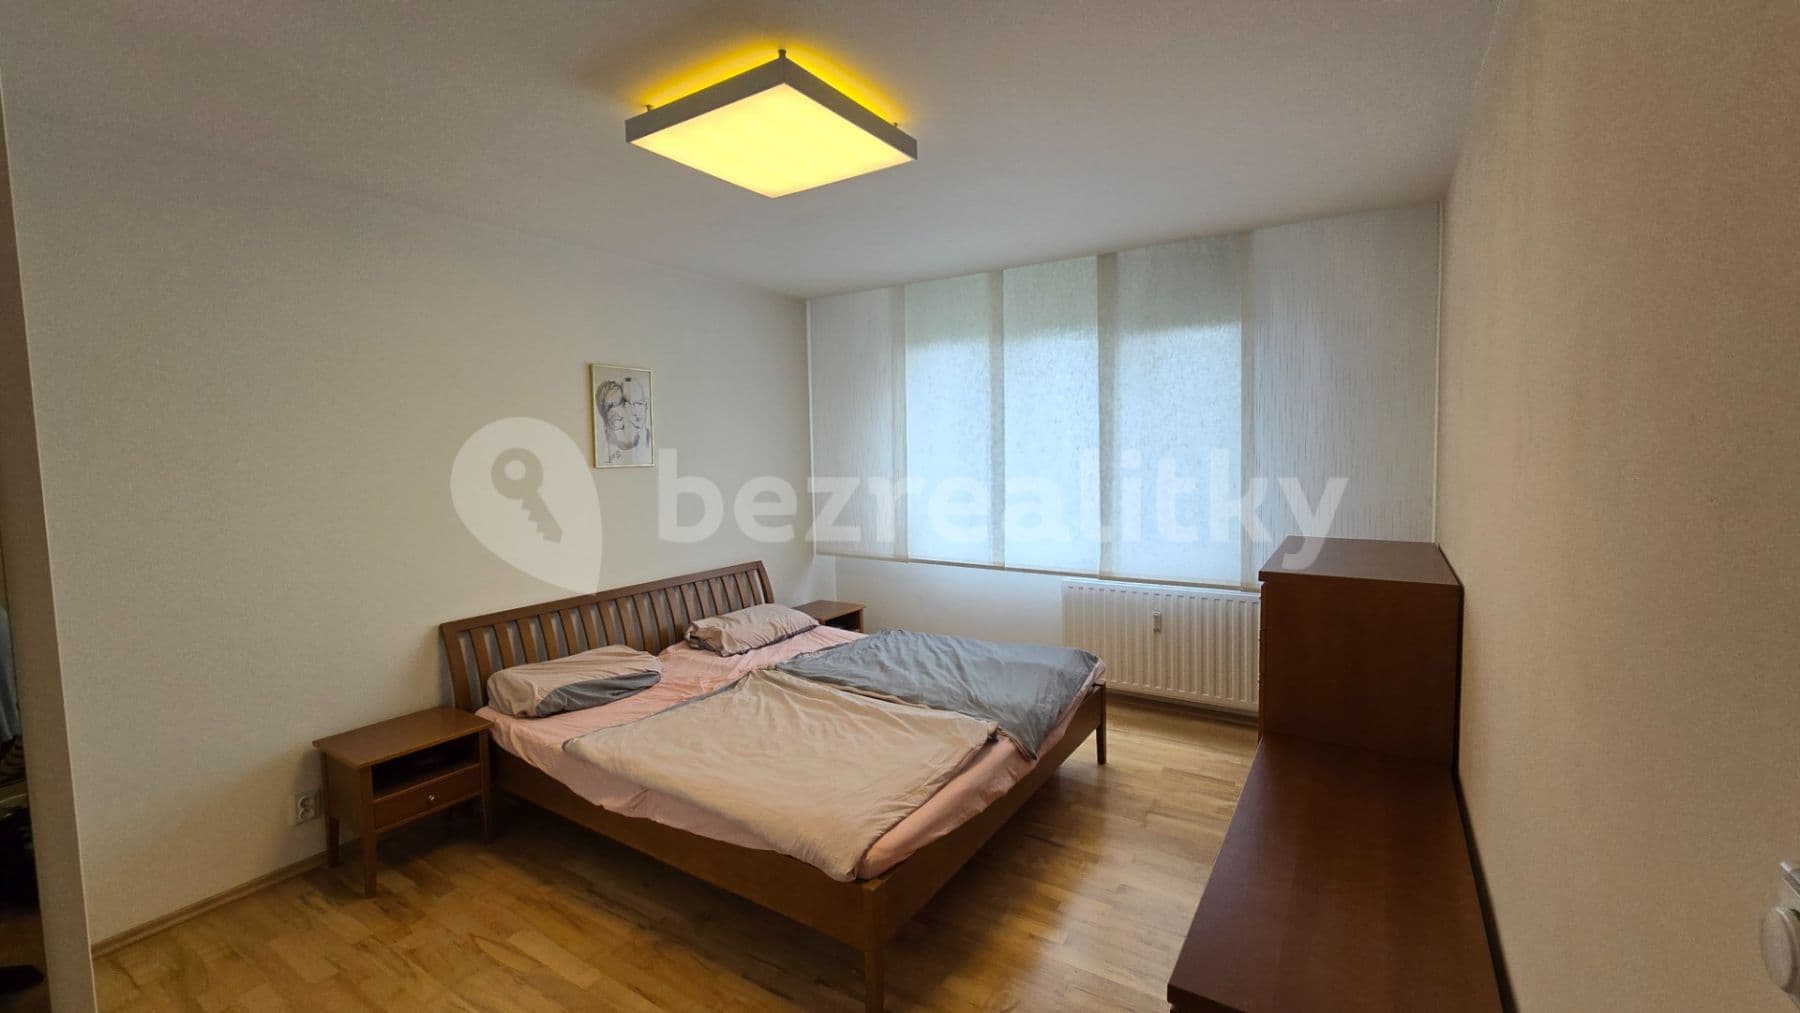 2 bedroom flat to rent, 51 m², Pavlovská, Prague, Prague